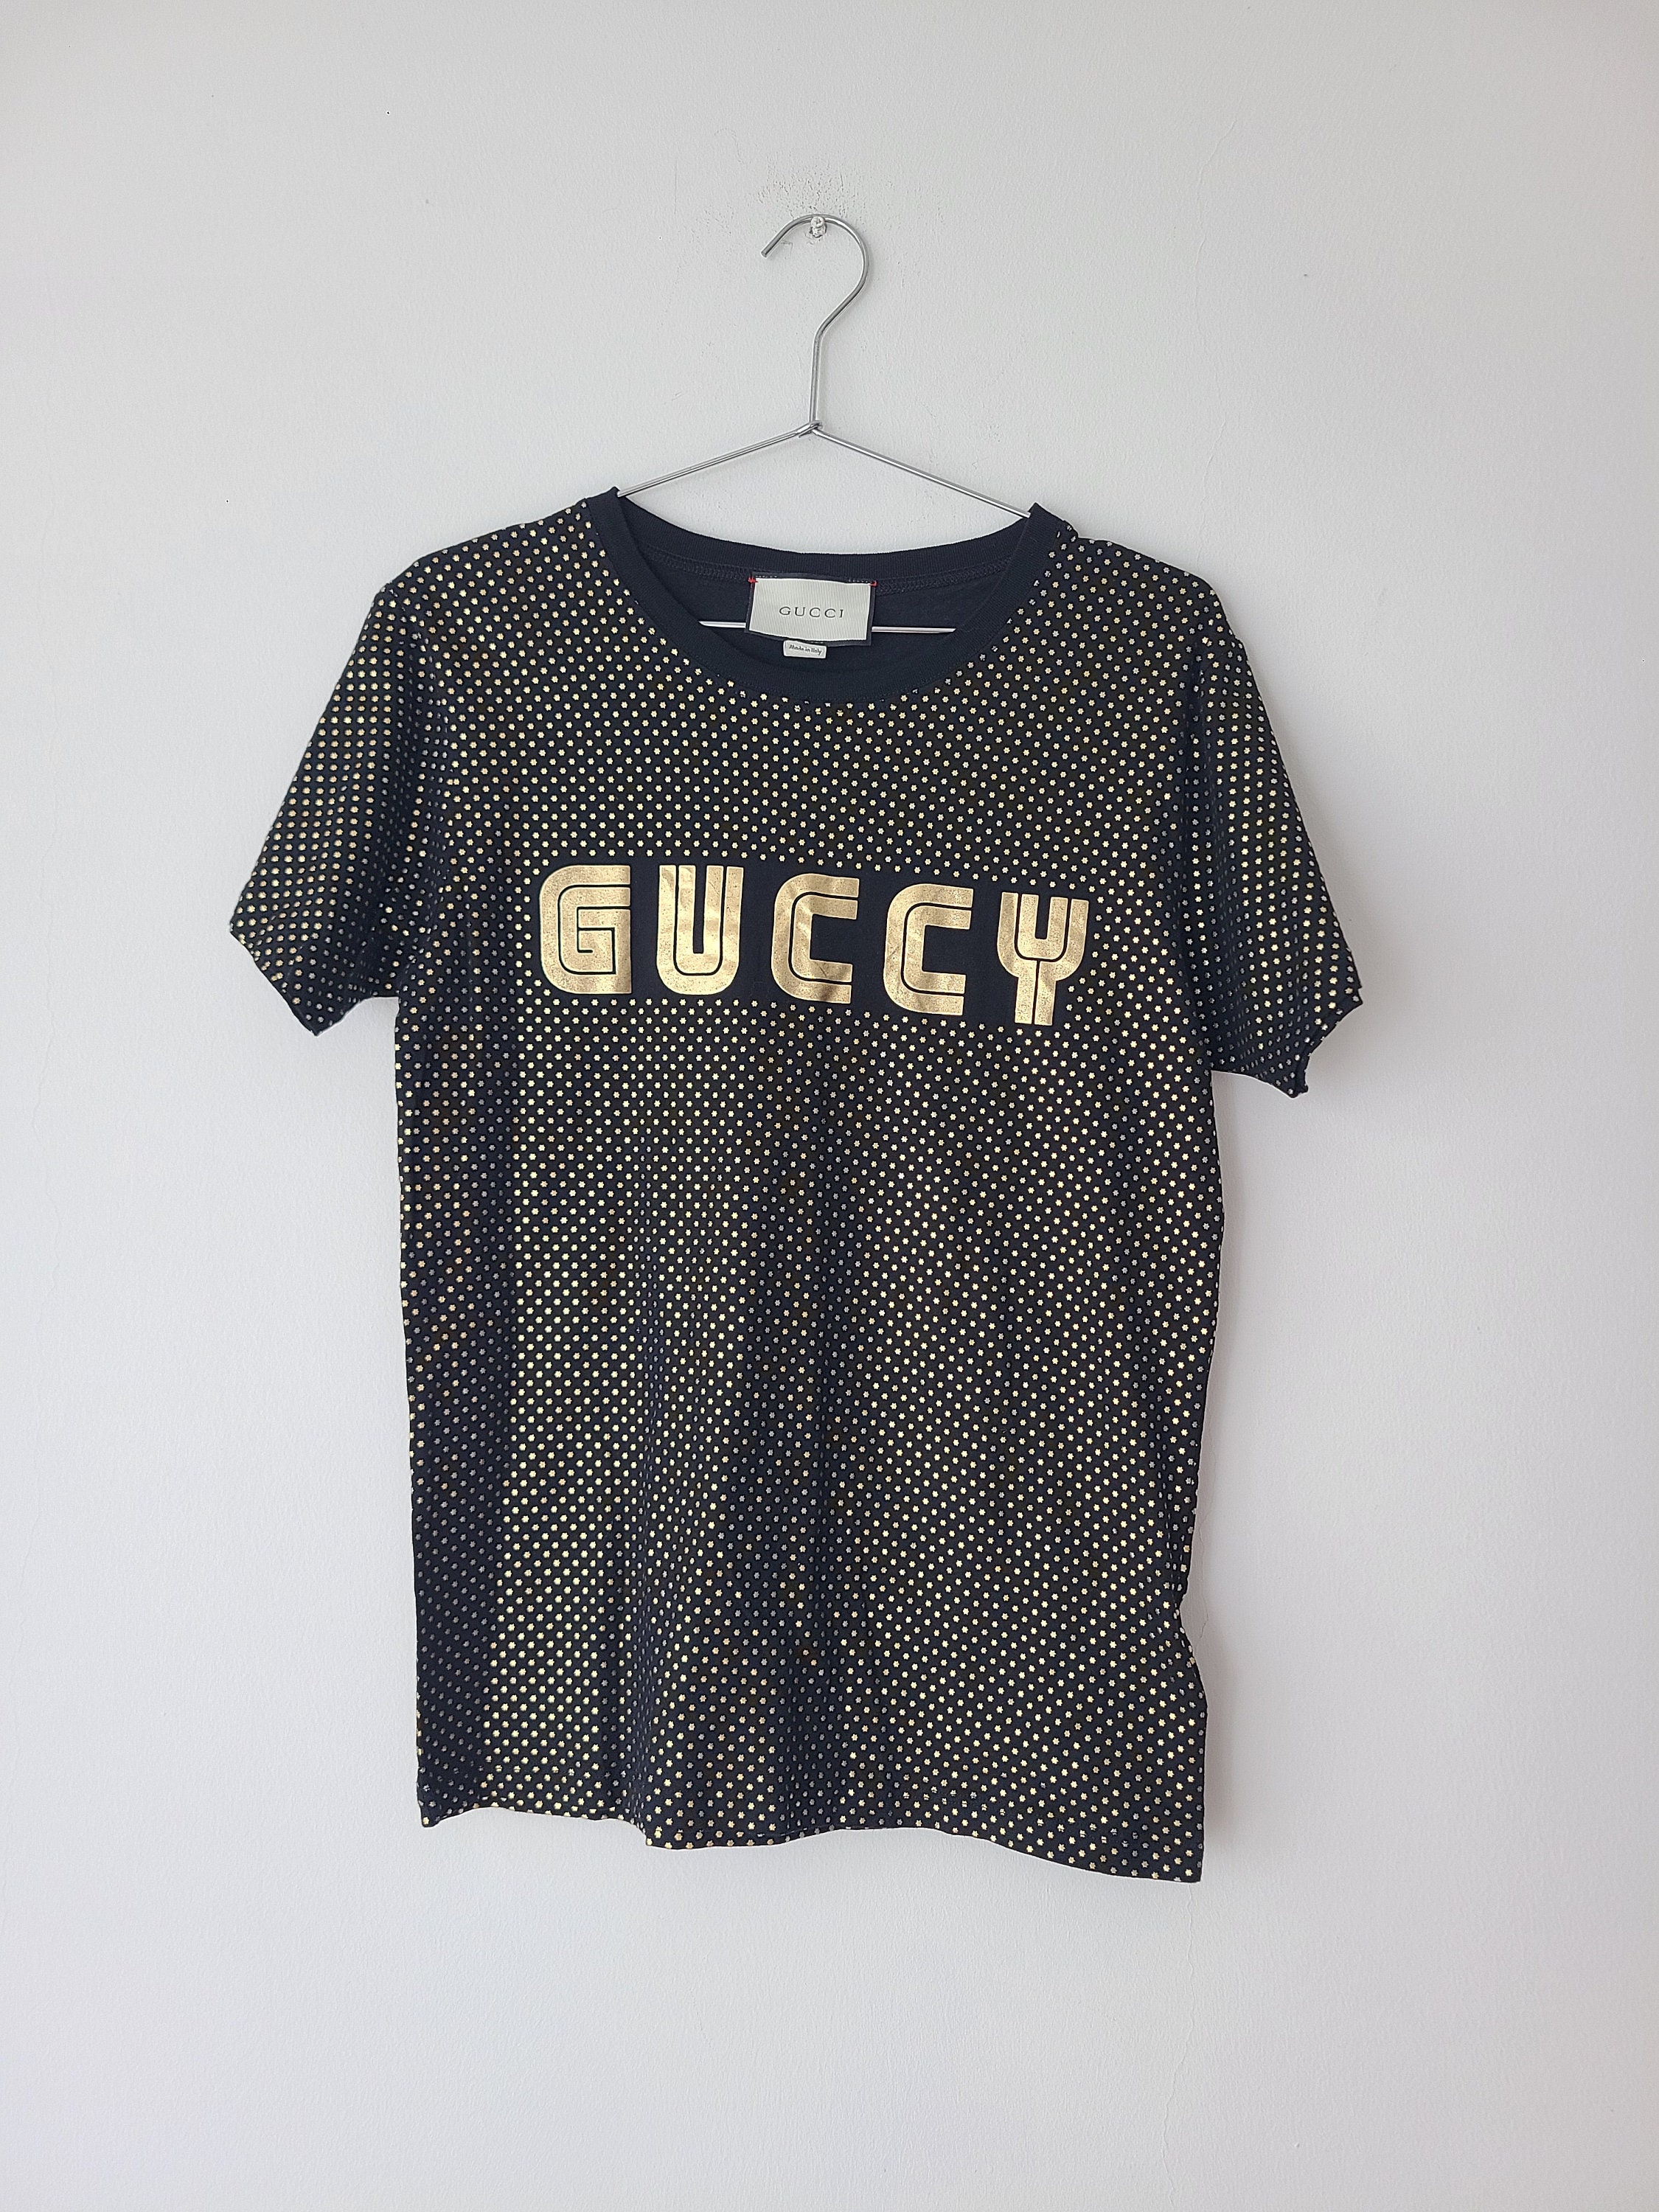 belangrijk Pakket boycot Gucci Shirt Women - Etsy